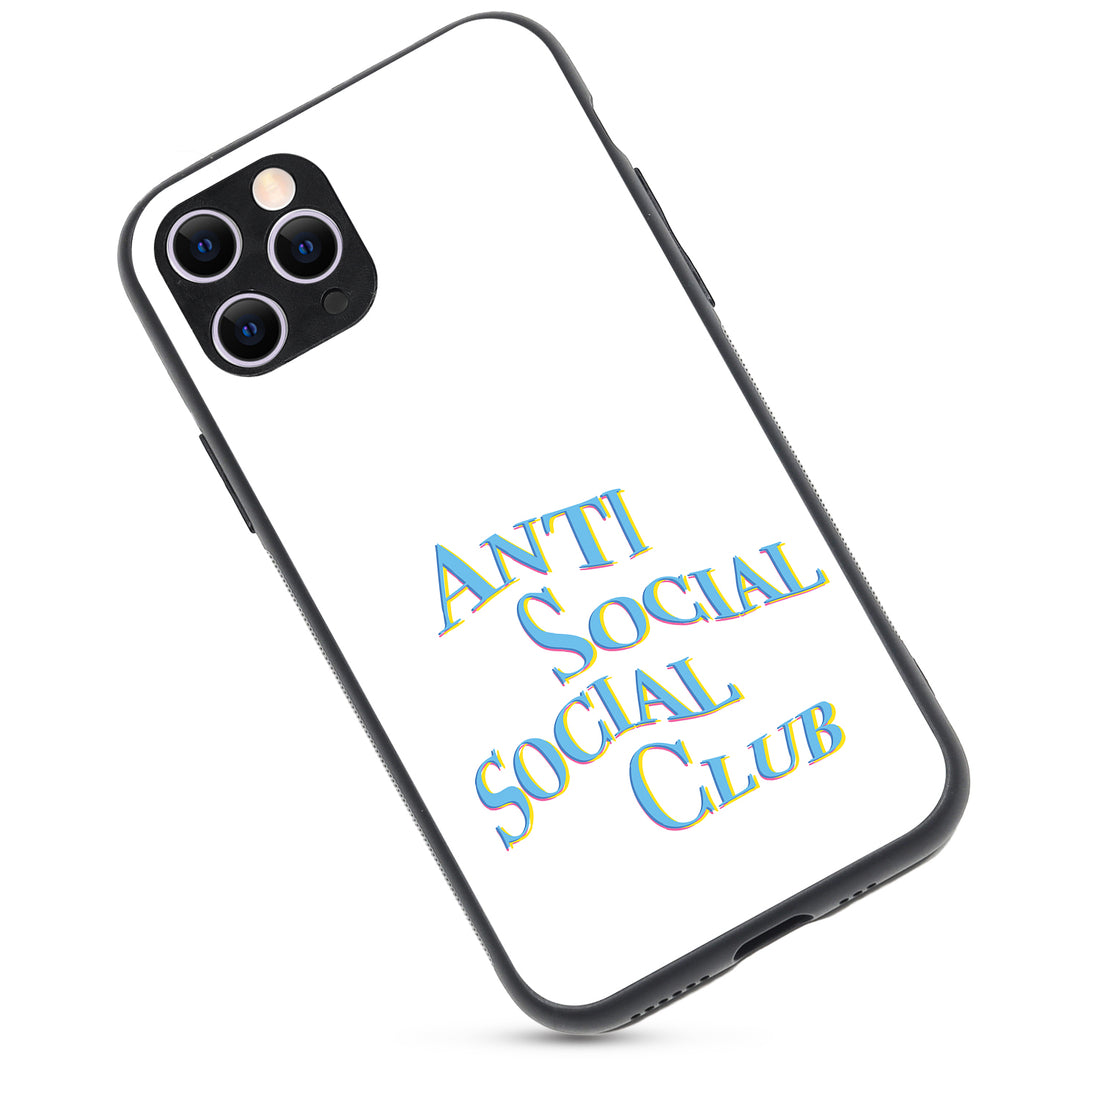 Social Club Motivational Quotes iPhone 11 Pro Case